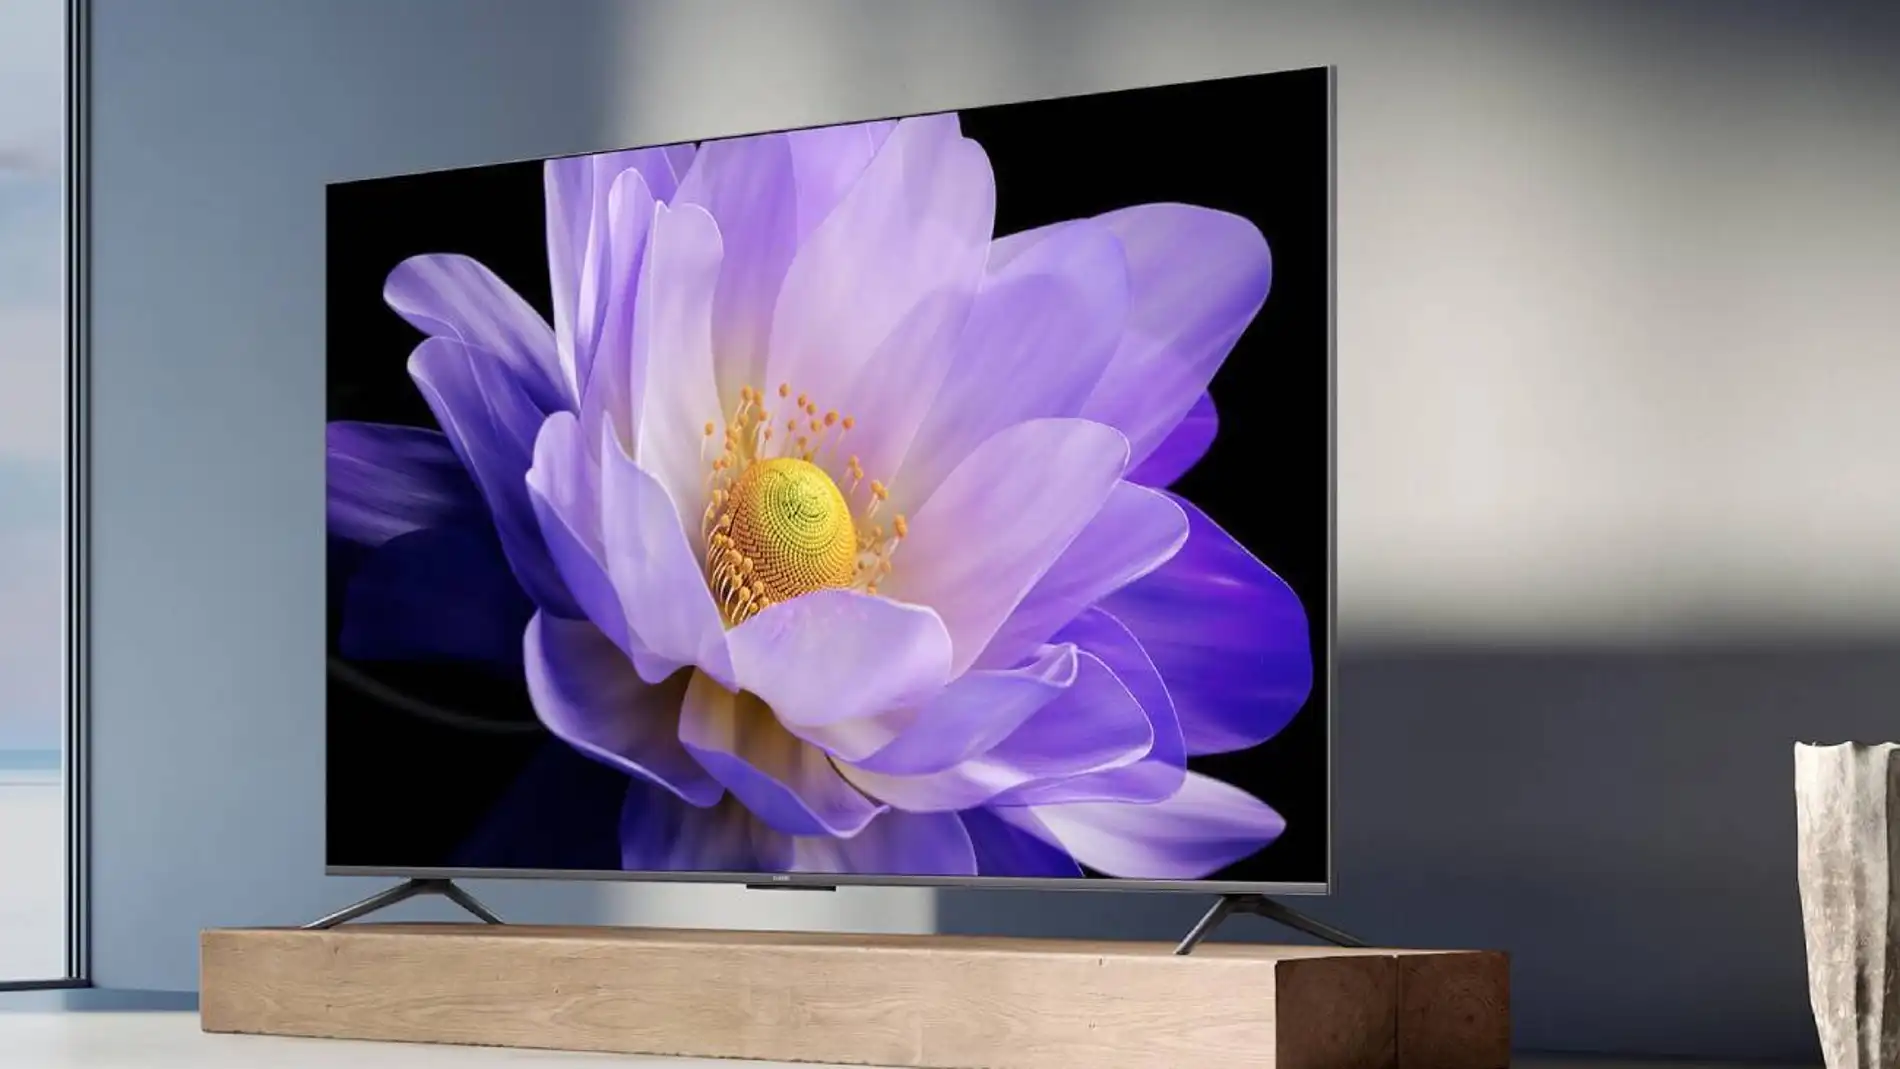 Xiaomi TV Pro S Mini LED, así es su nuevo televisor MiniLED de 85 pulgadas